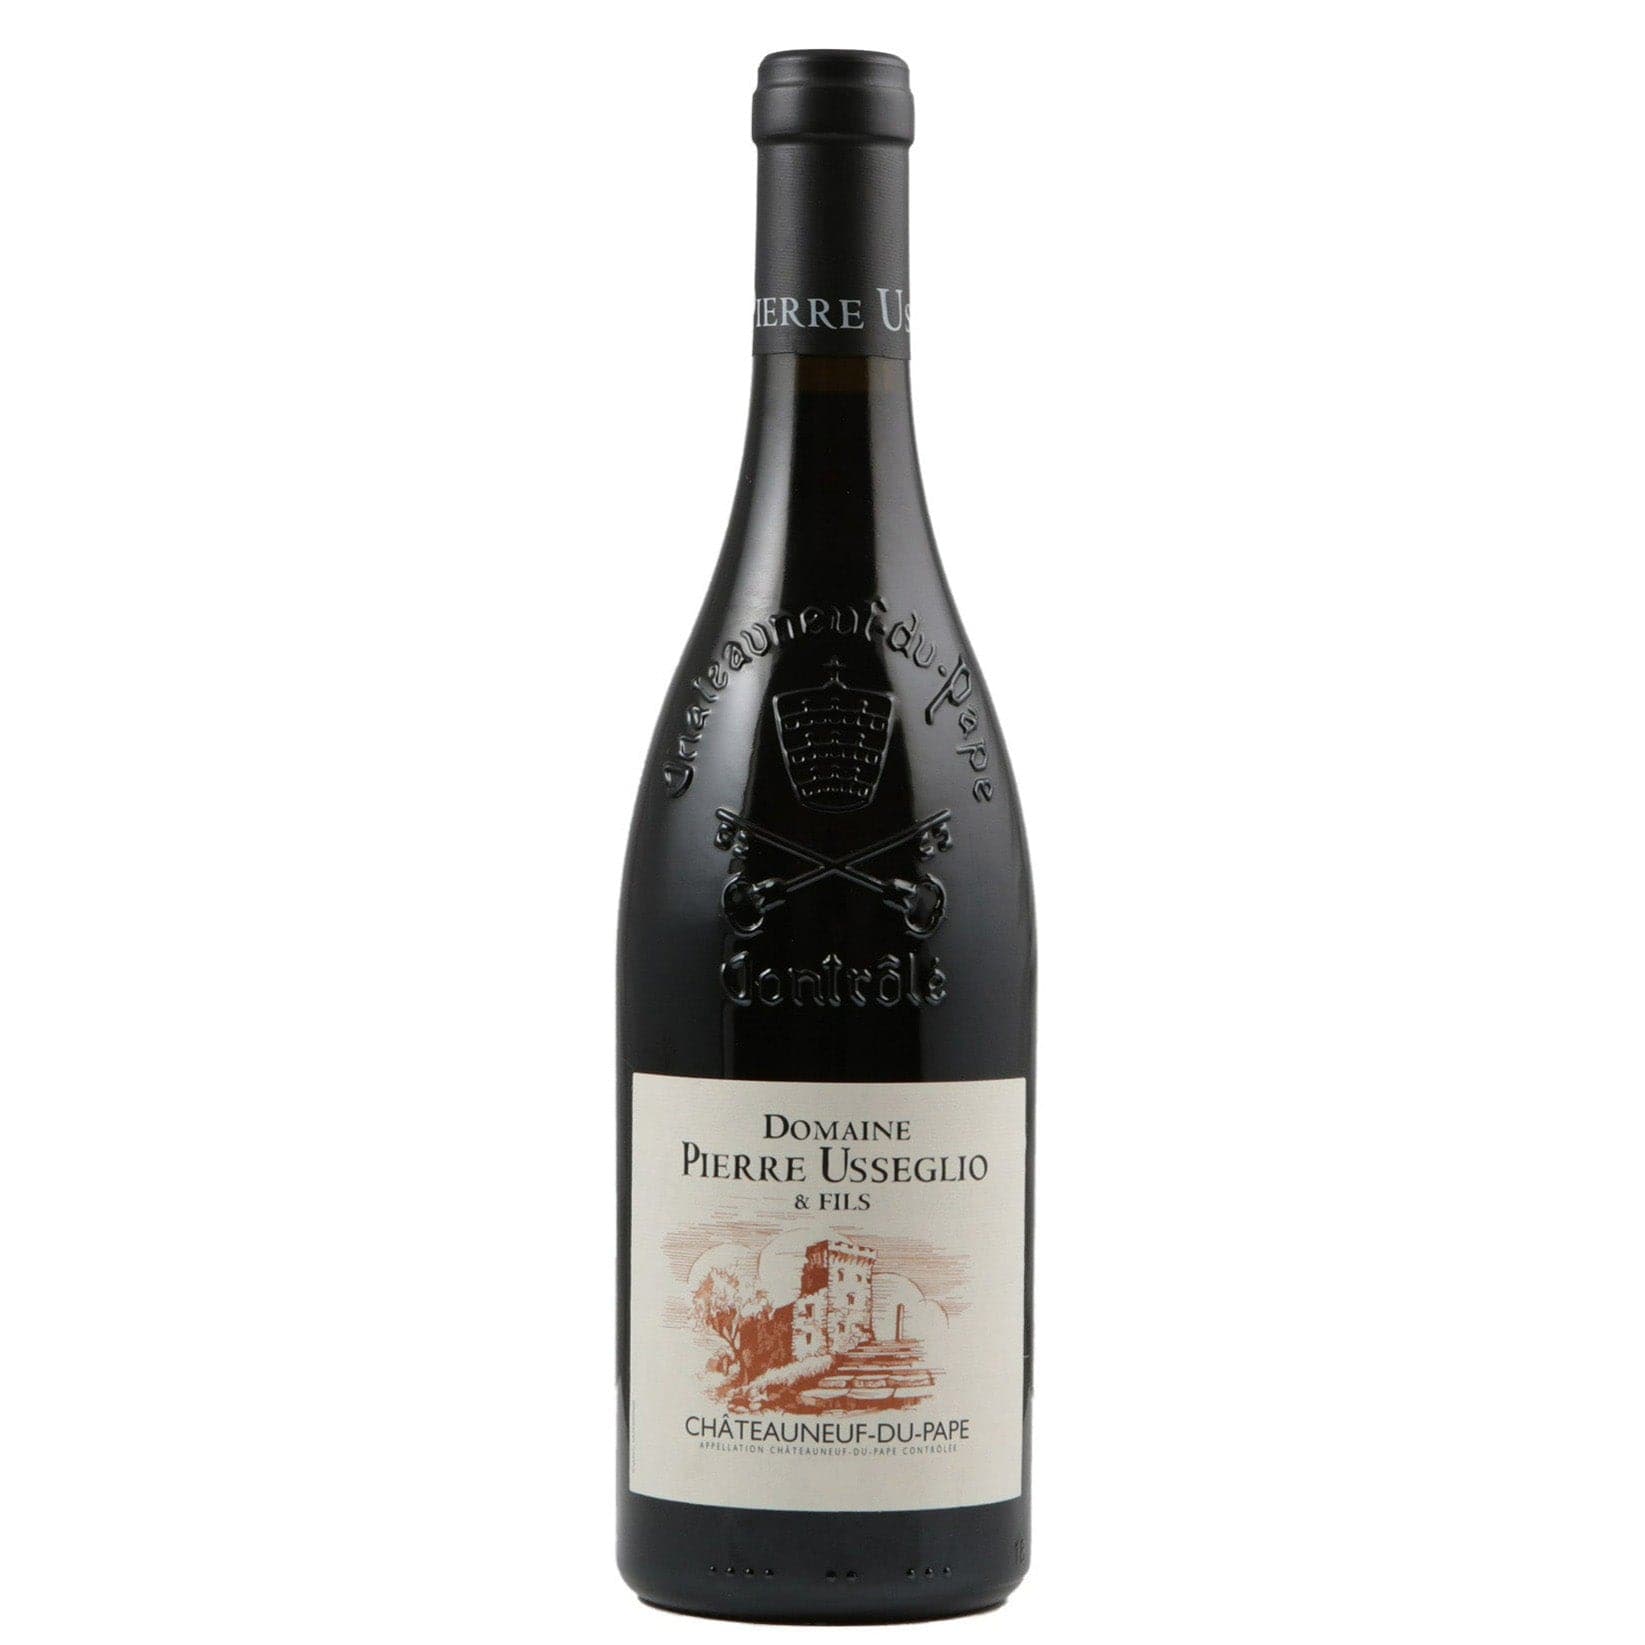 Single bottle of Red wine Dom. Pierre Usseglio et Fils, Chateauneuf du Pape, 2016 Grenache, Syrah, Cinsault & Mourvedre